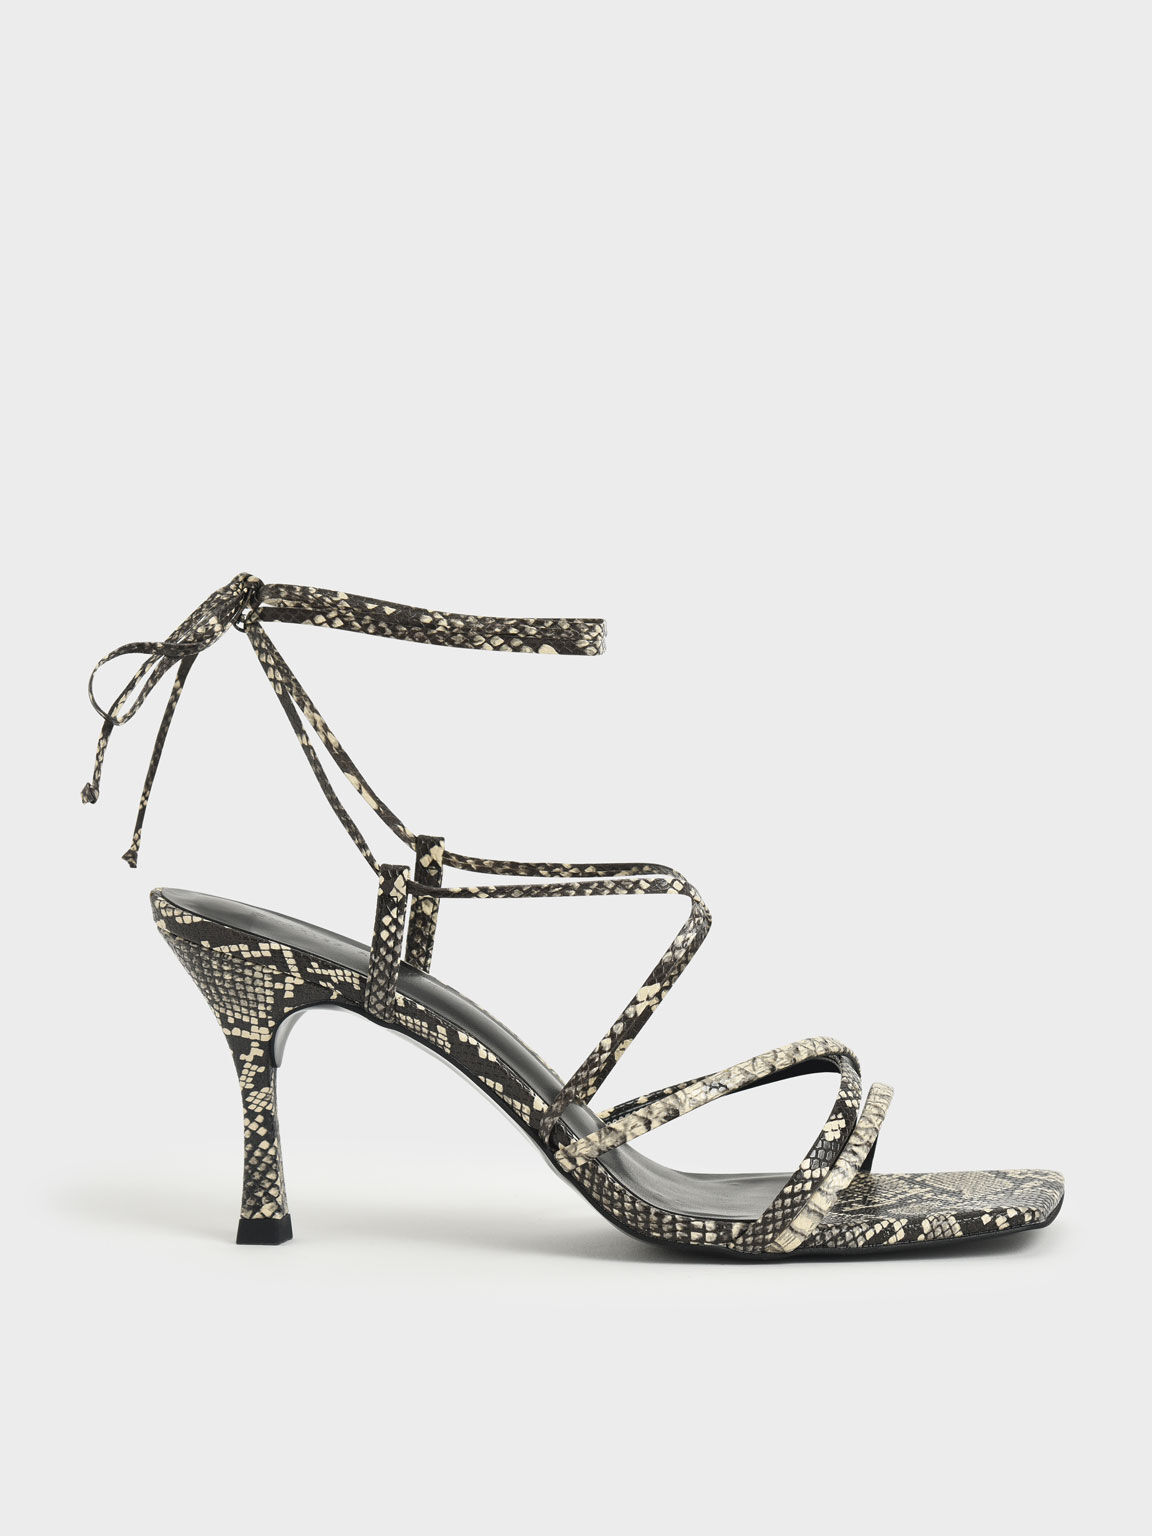 Buy P.B.H. Snake Print Heeled Sandal For Women | Women's Block Heel Sandal  For Party | Stylish Heels For Girls at Amazon.in